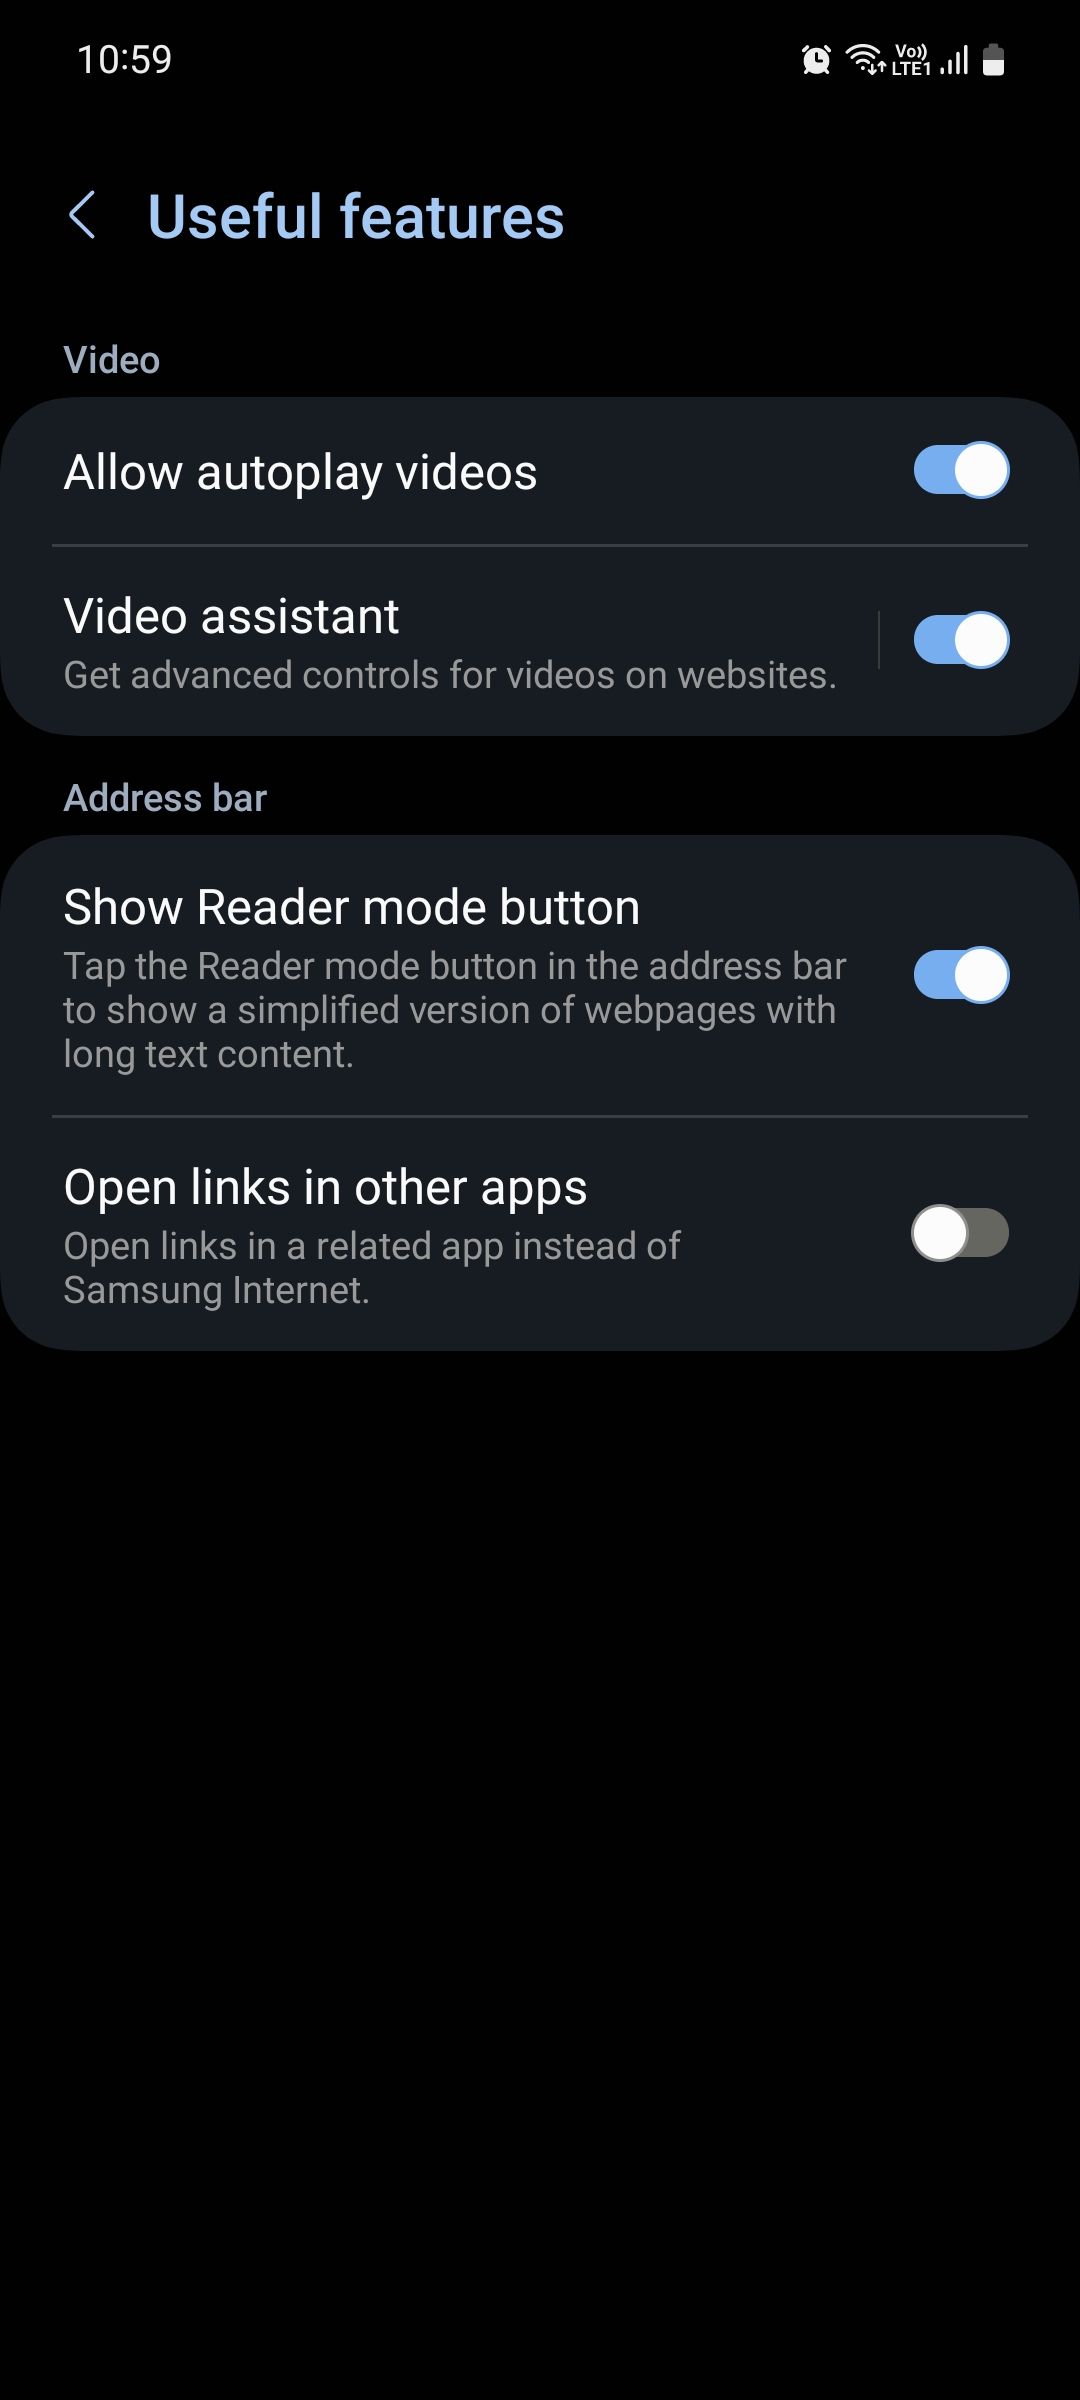 Samsung Internet mobile browser Useful features menu